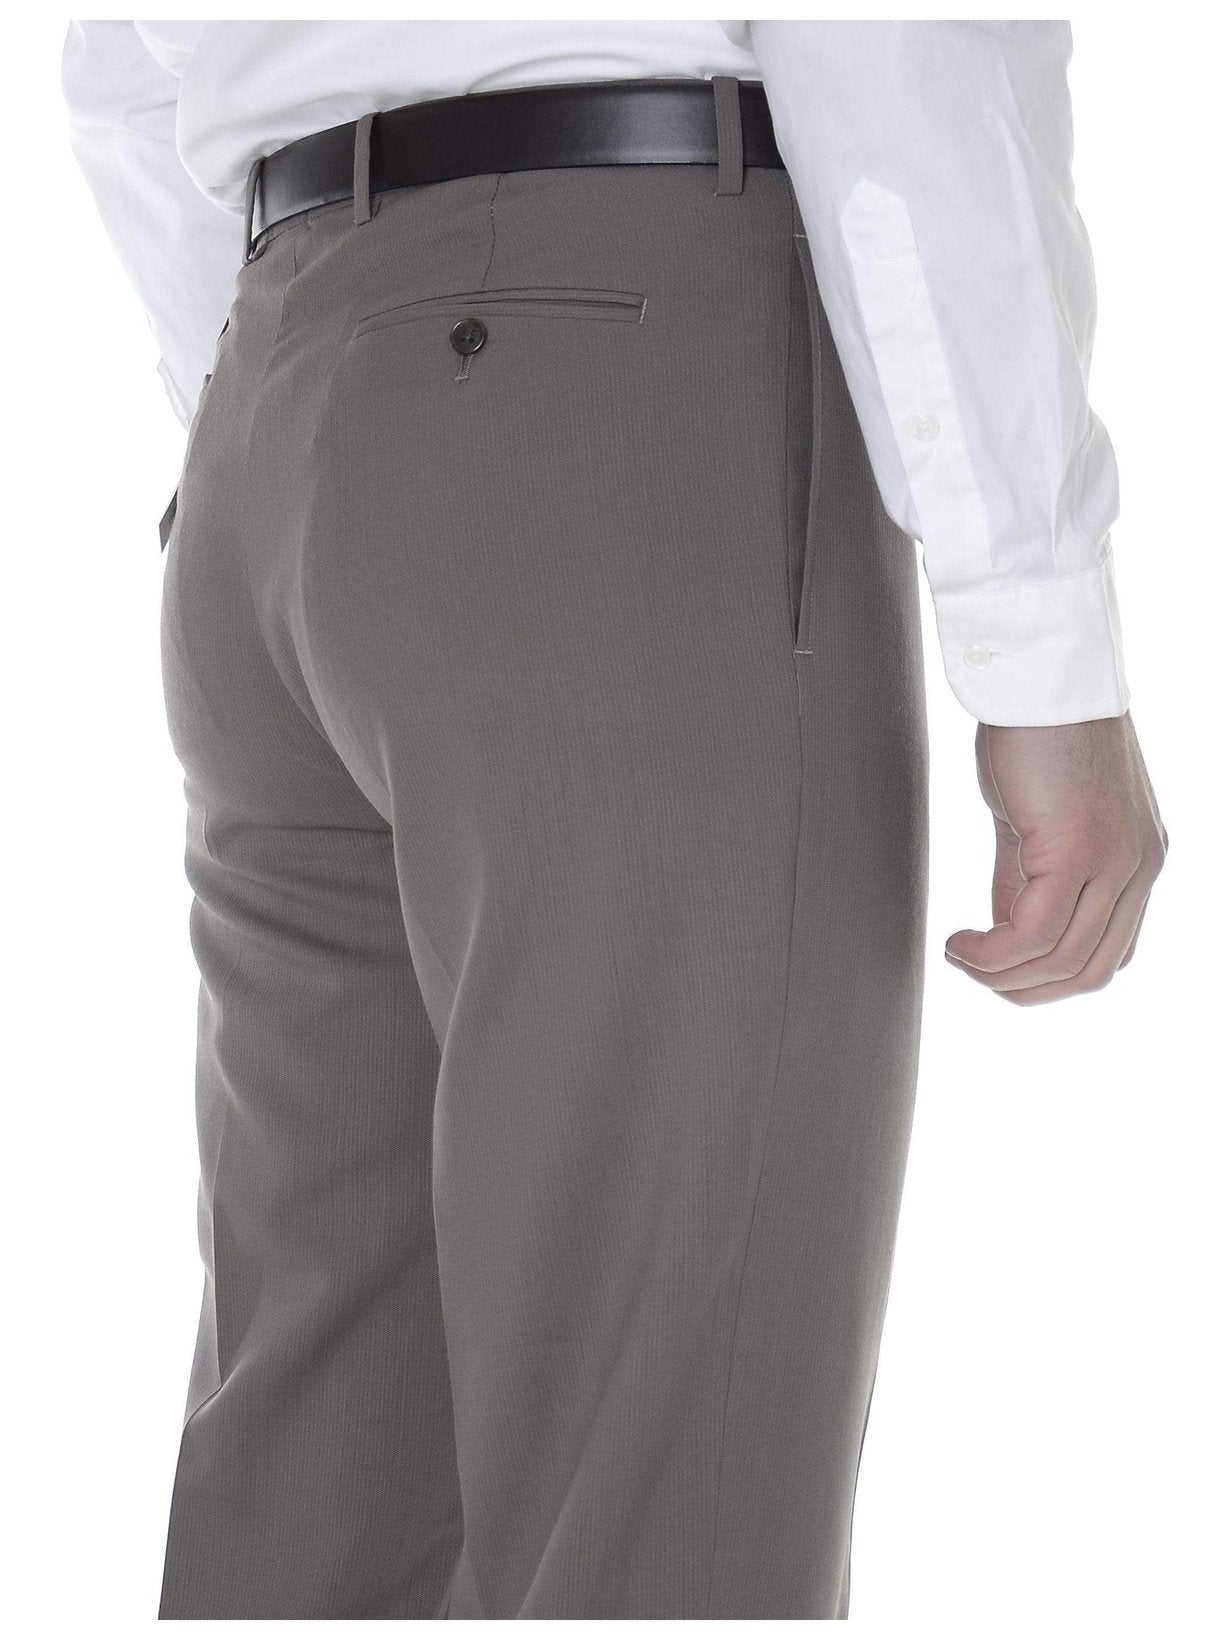 Performance Pants for Men -Comfortable Slim Fit Trousers Men